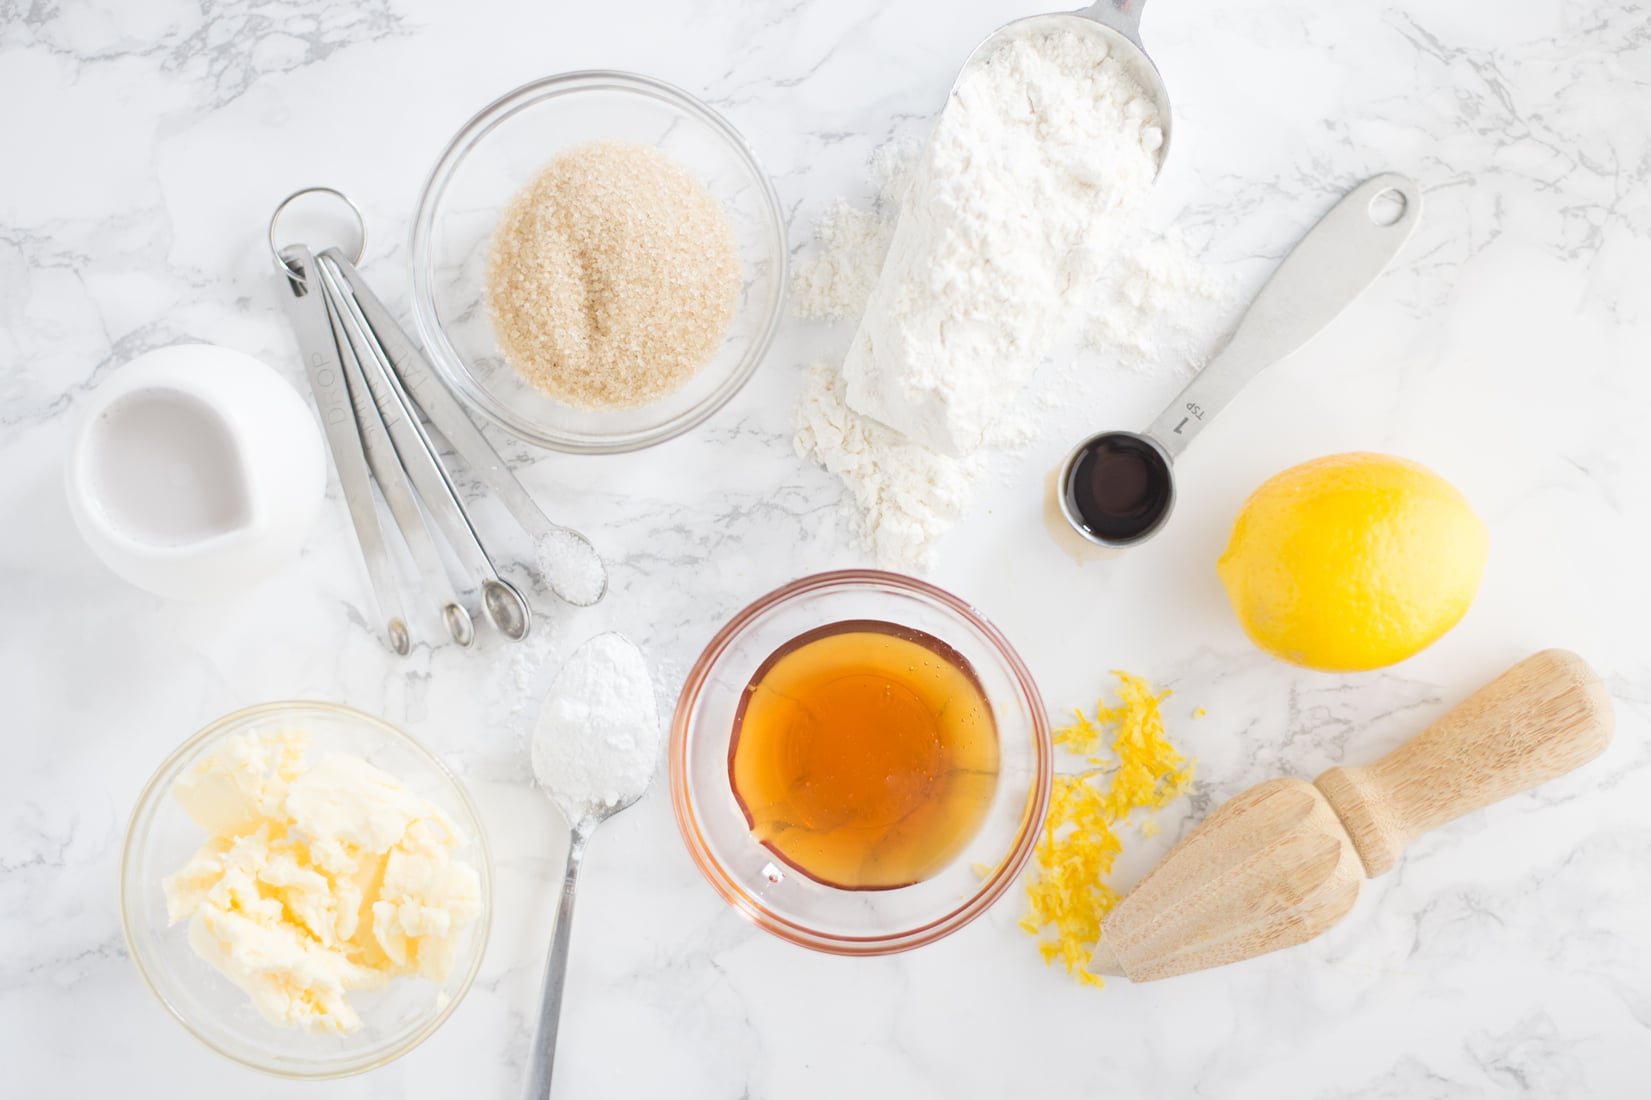 Lemon, vanilla extract, butter, flour, sugar on marble counter.